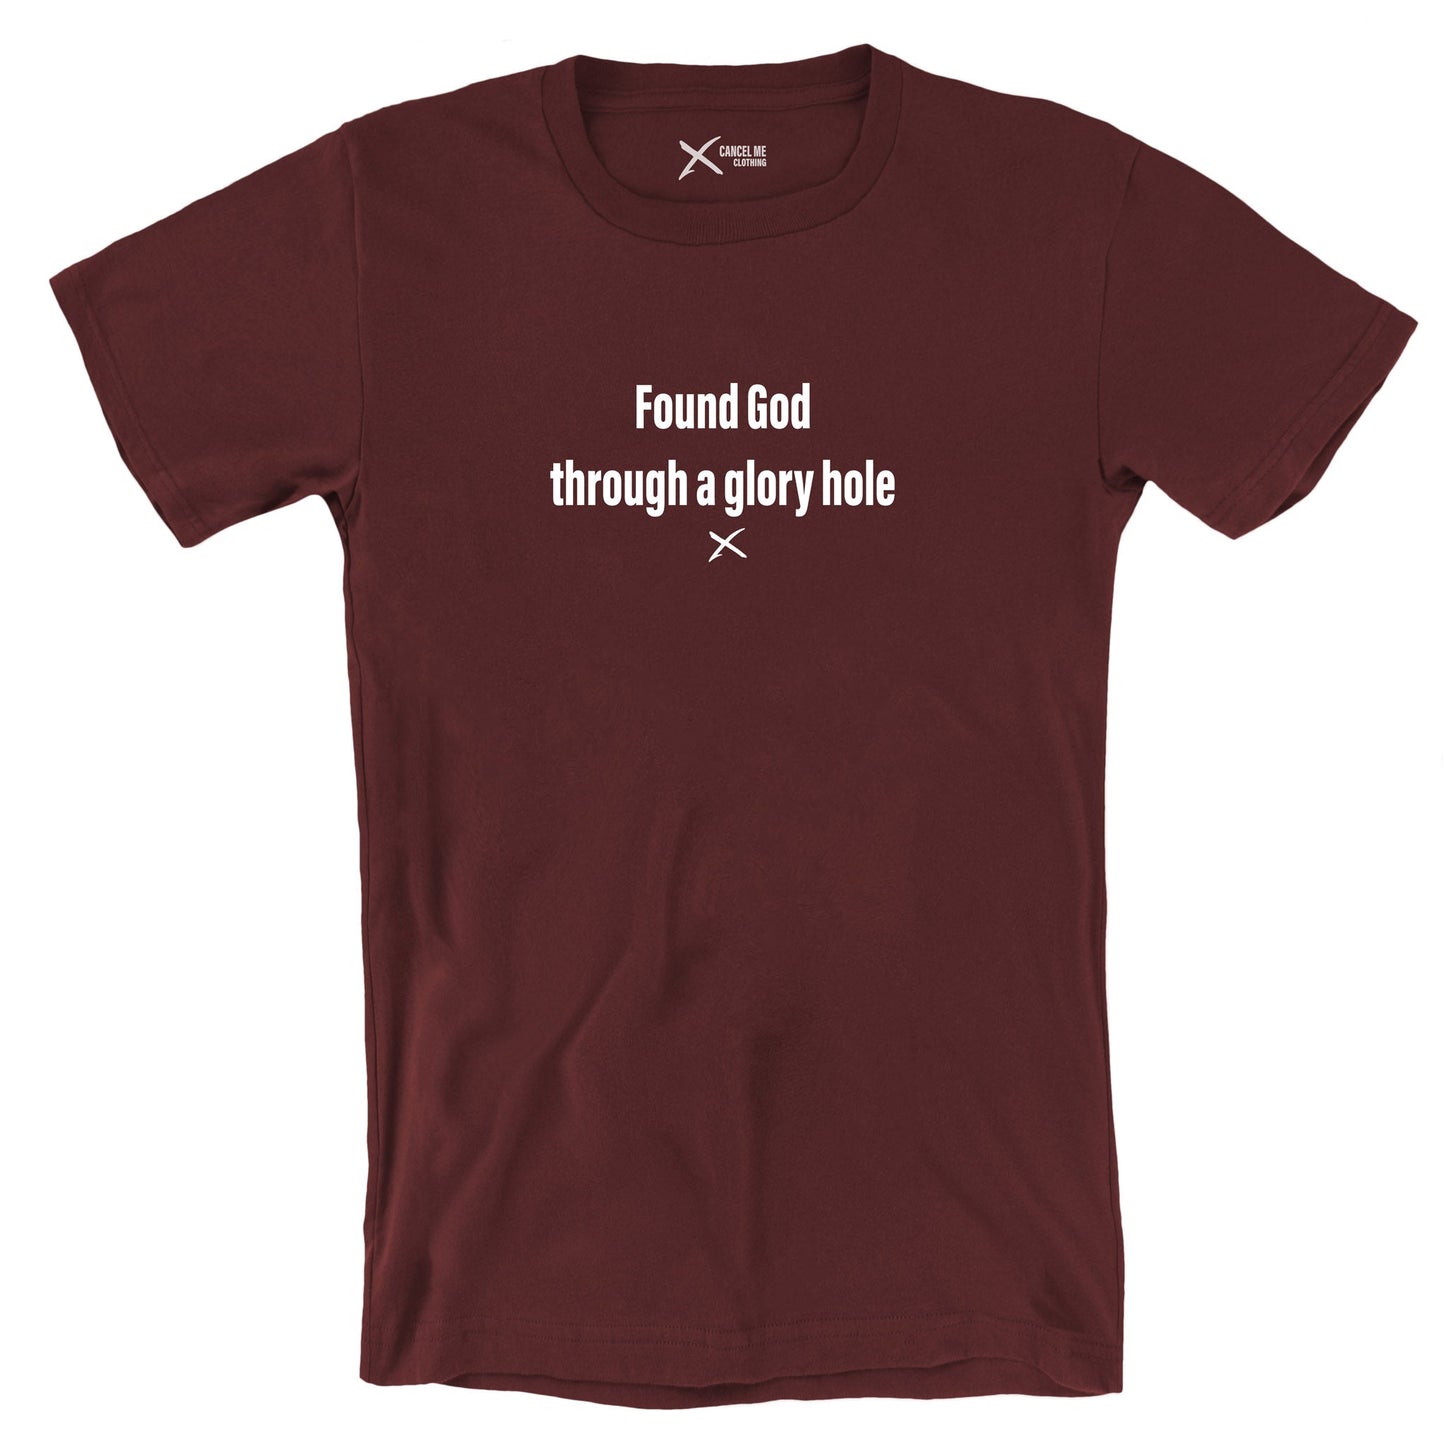 Found God through a glory hole - Shirt